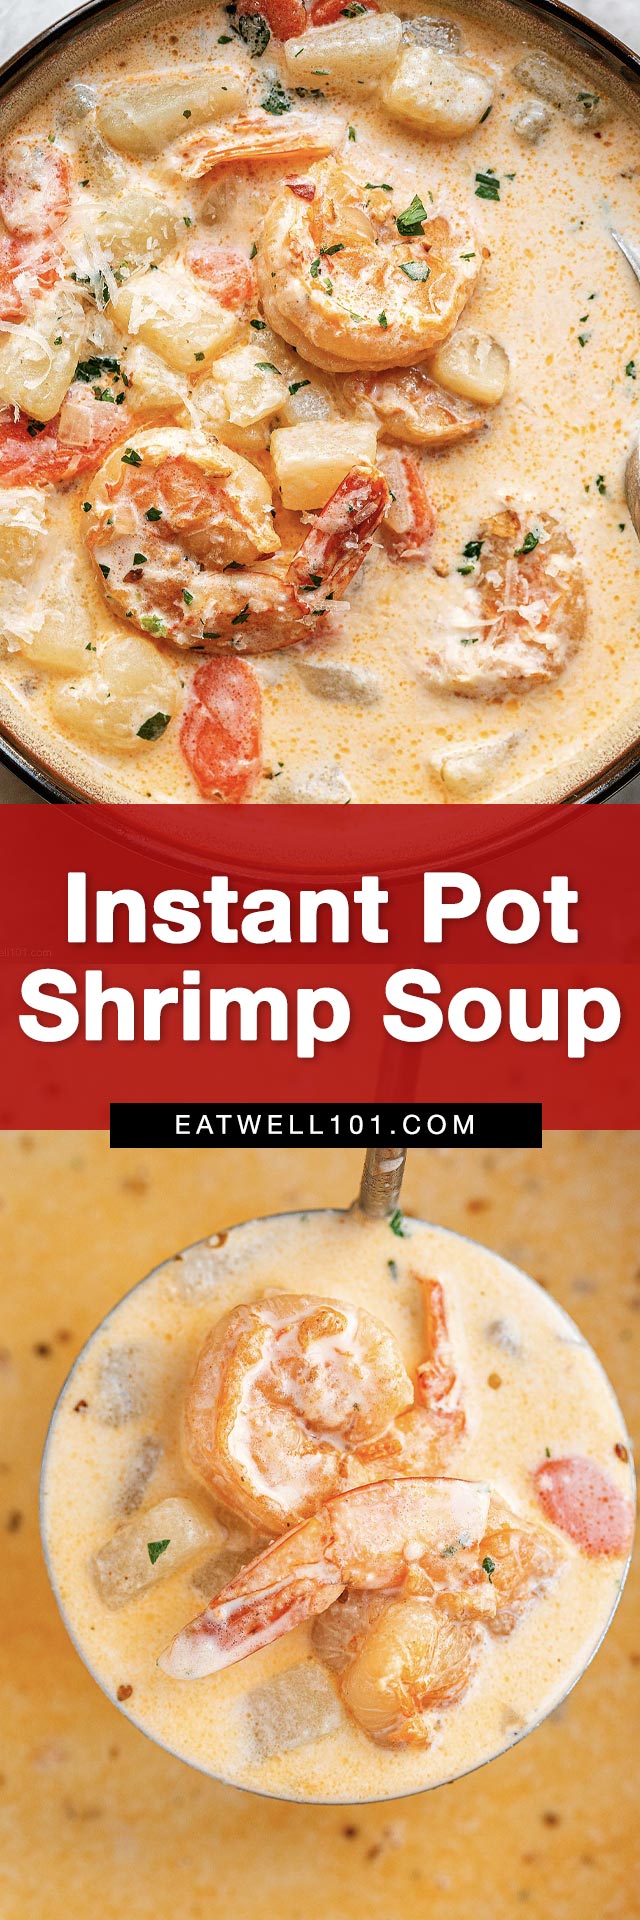 Instant Pot Creamy Potato Shrimp Soup - #shrimp #potato #soup #recipe #eatwell101 - Creamy and savory, this creamy potato shrimp soup is the ultimate comfort food on a cold night! 